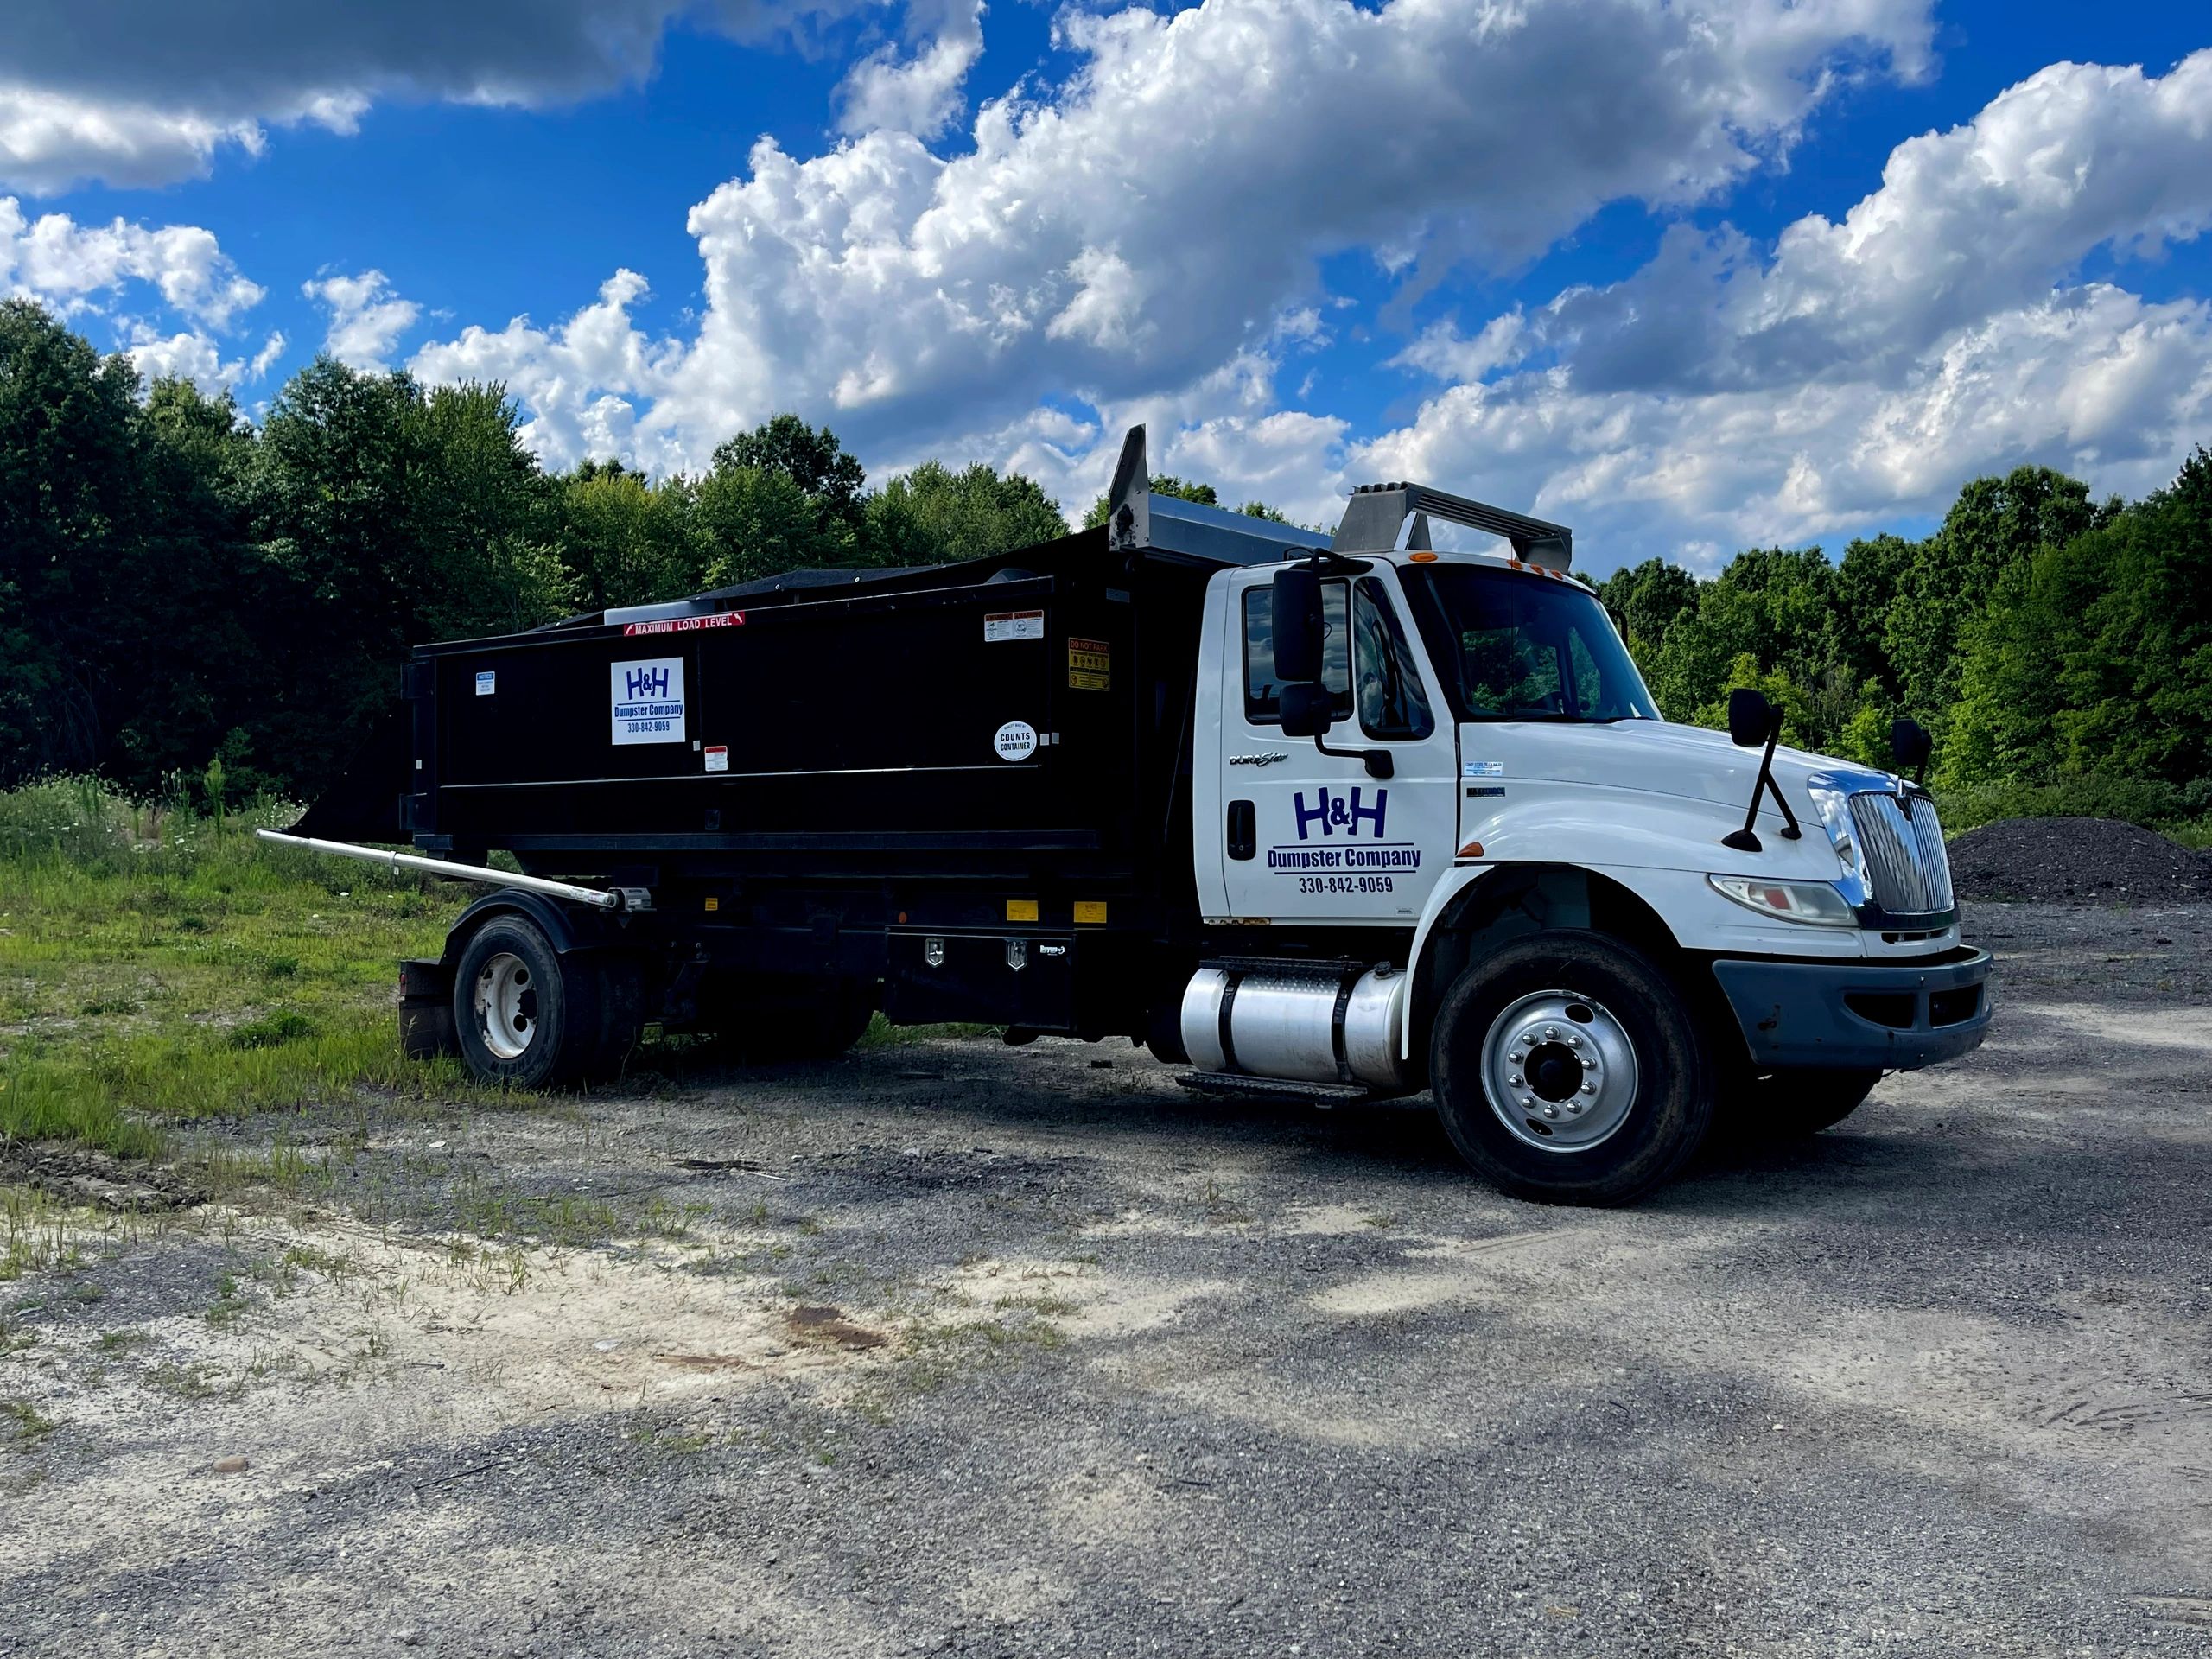 H&H Dumpster Company Truck